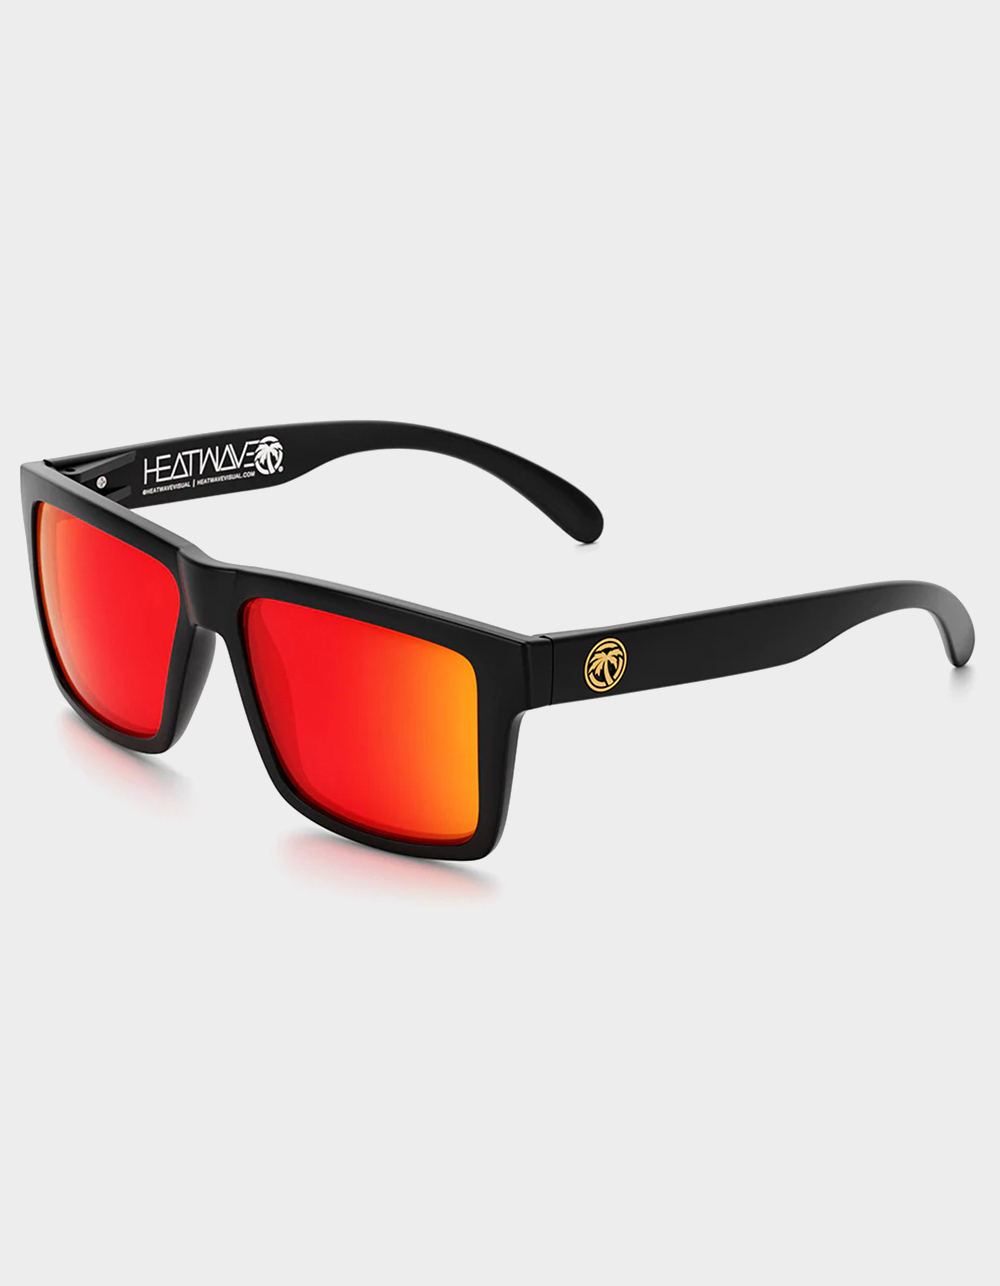 Heat Wave Visual Vise Z87 Sunglasses - Black - One Size